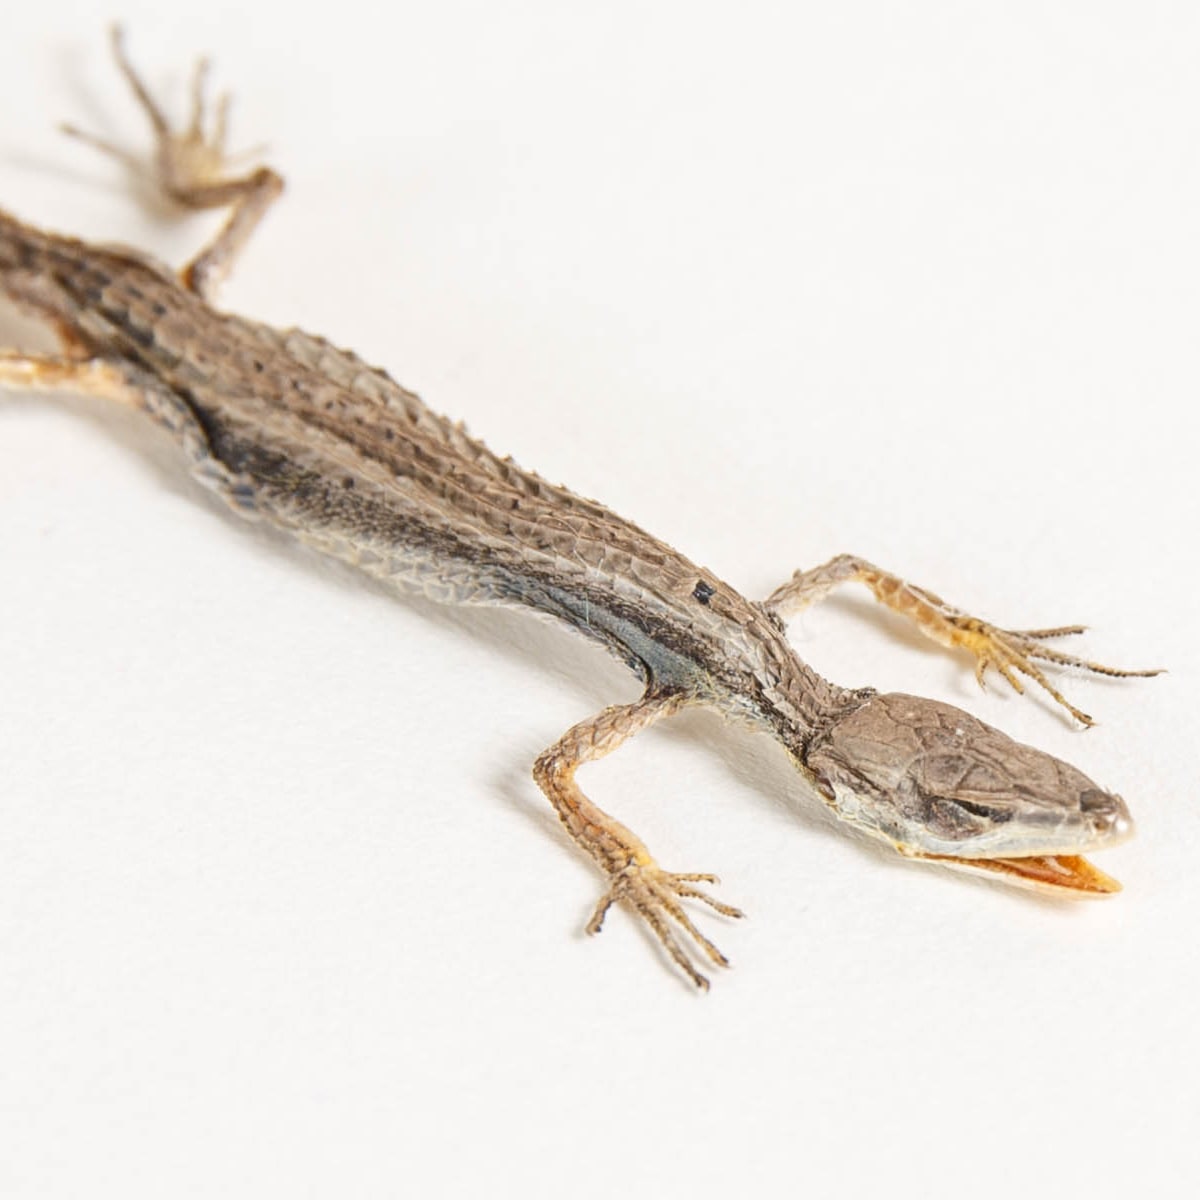 Long-tailed Grass Lizard in Box Frame (Takydromus sexlineatus)